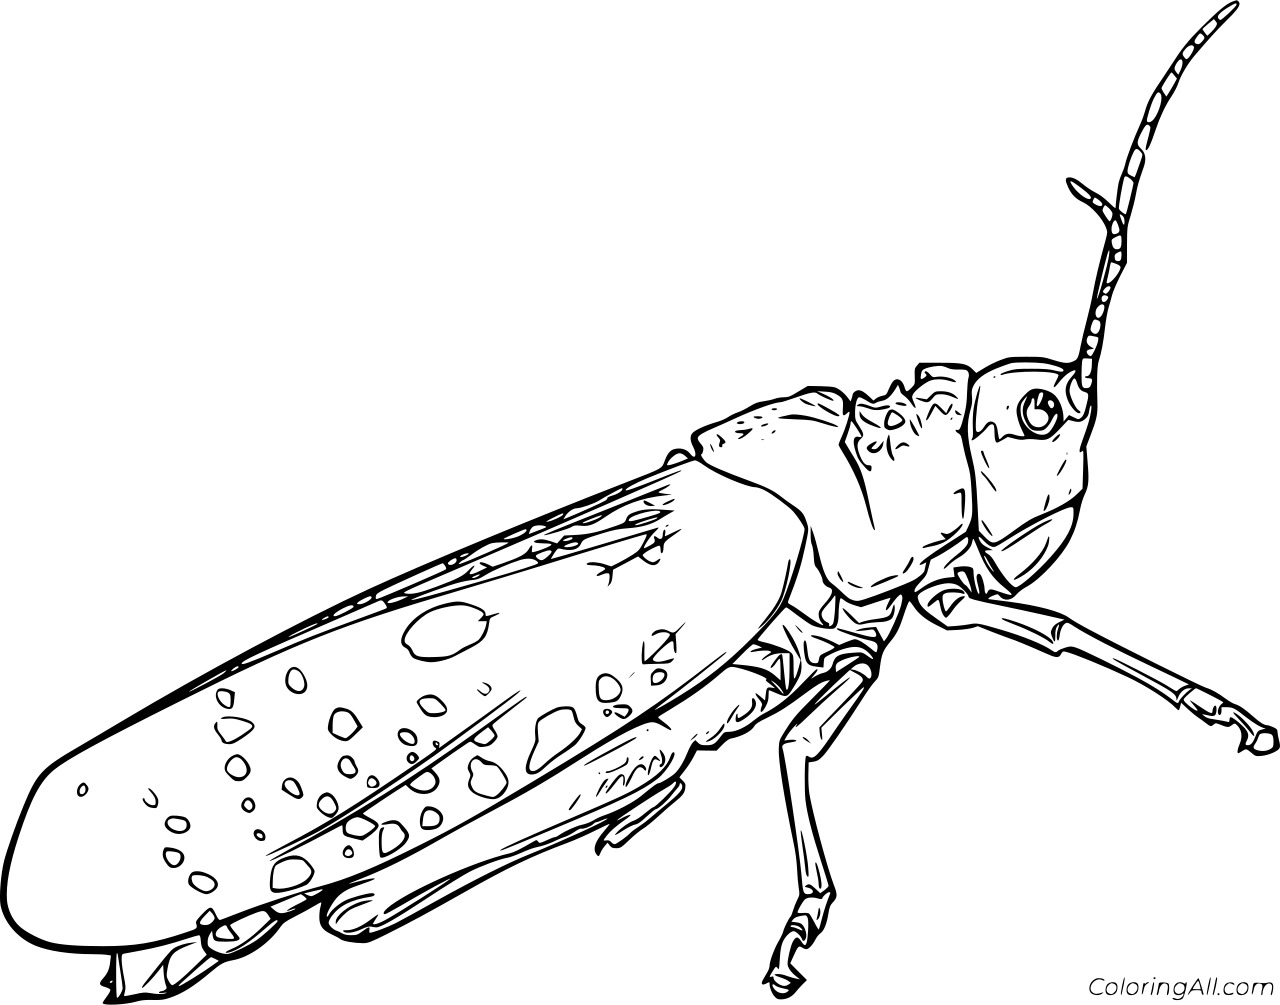 Big Realistic Grasshopper